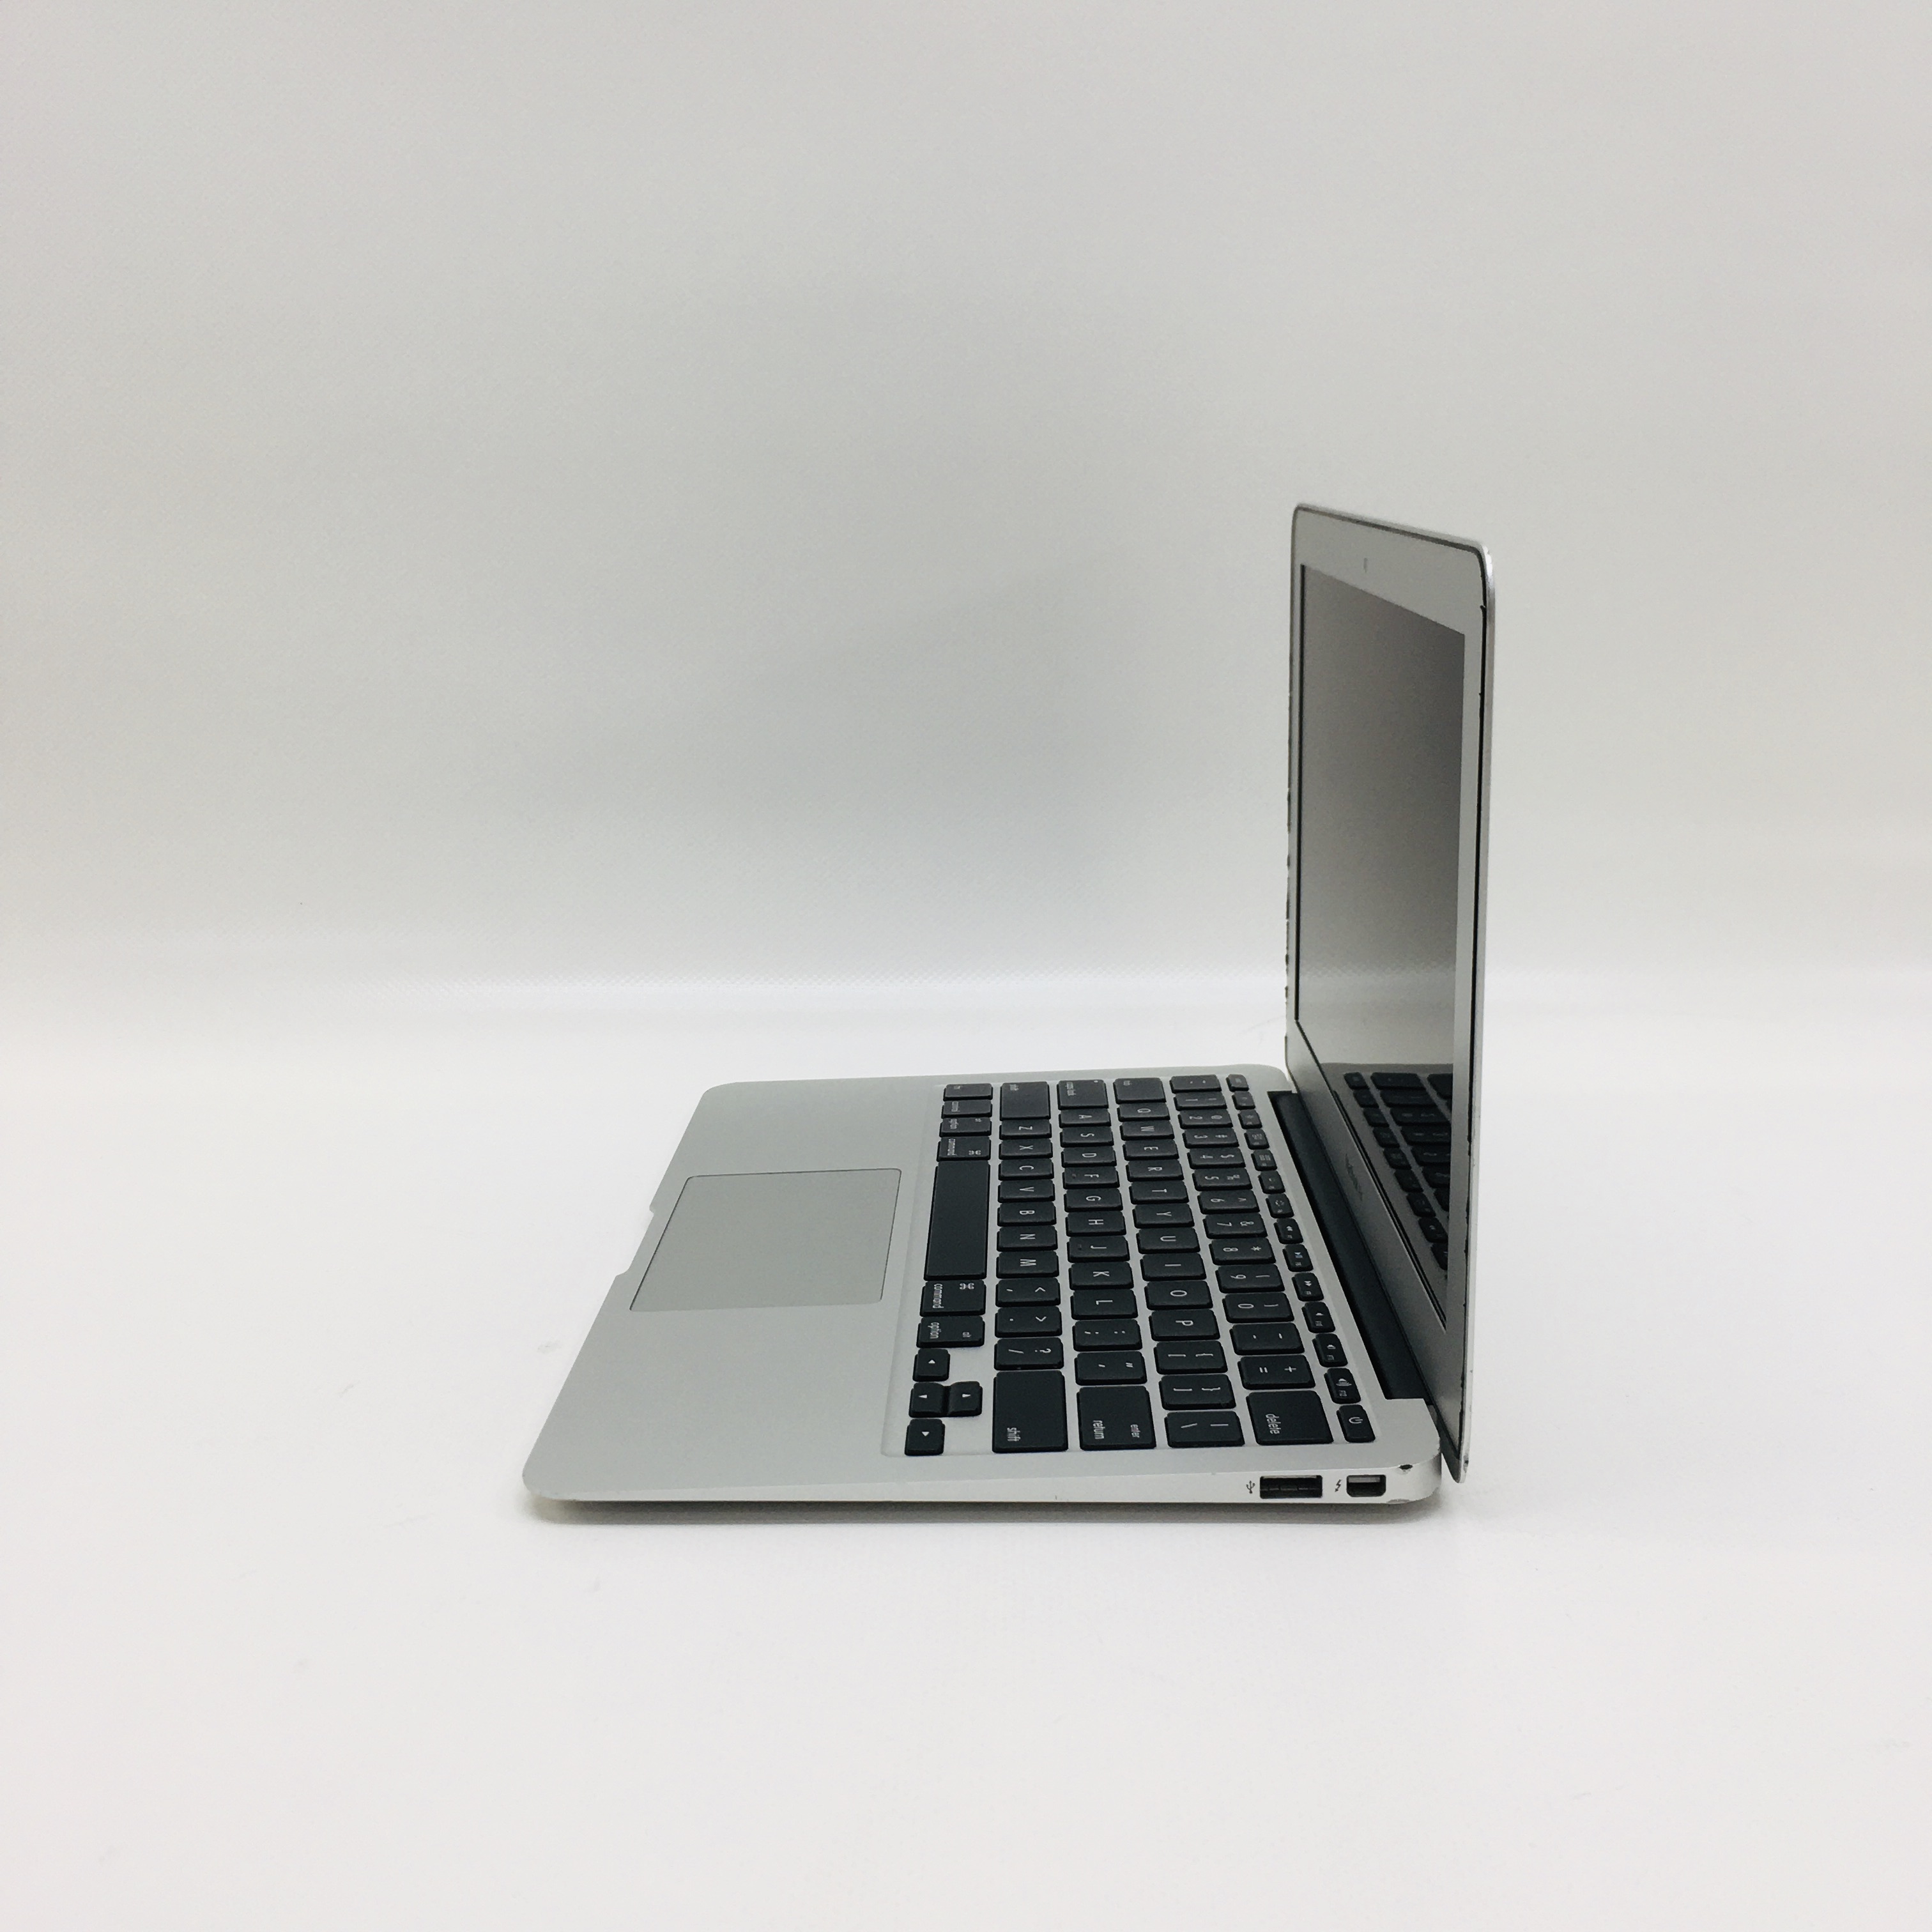 MacBook Air 11" Early 2015 (Intel Core i5 1.6 GHz 4 GB RAM 128 GB SSD), Intel Core i5 1.6 GHz, 4 GB RAM, 128 GB SSD, image 3